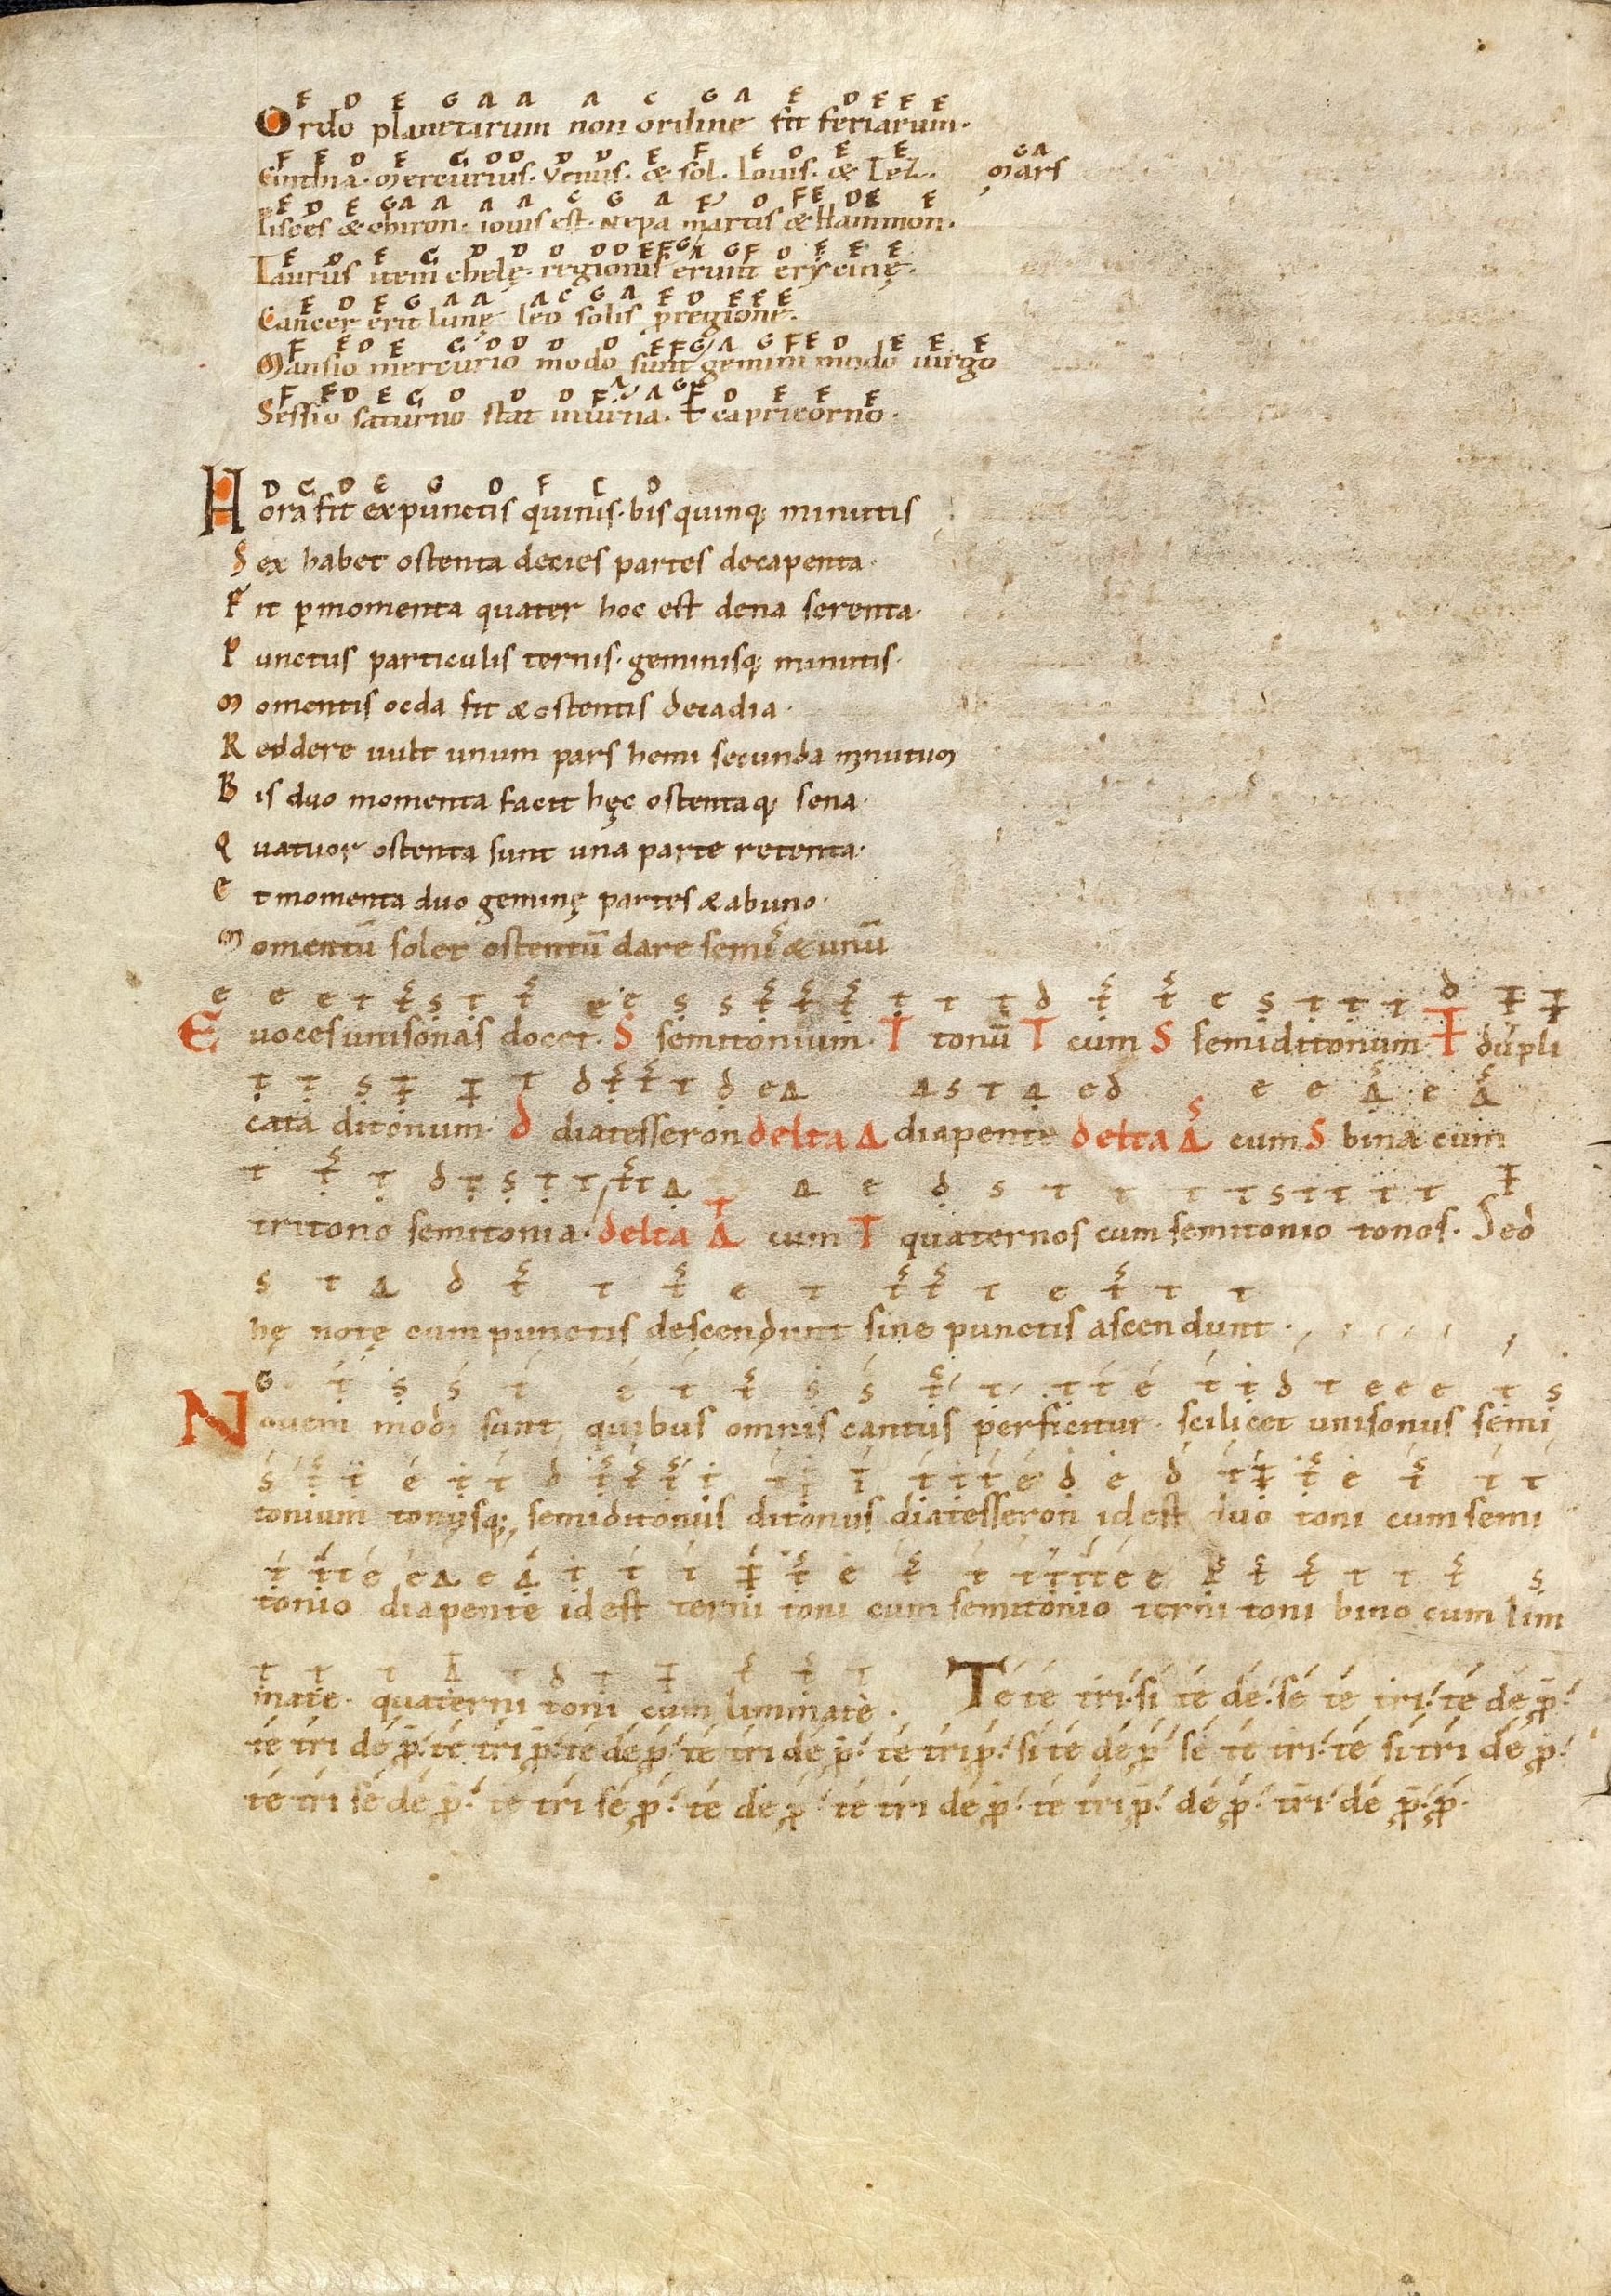 Hermann, E voces unisonas with neumes (Karlsruhe 504 folio 33v)